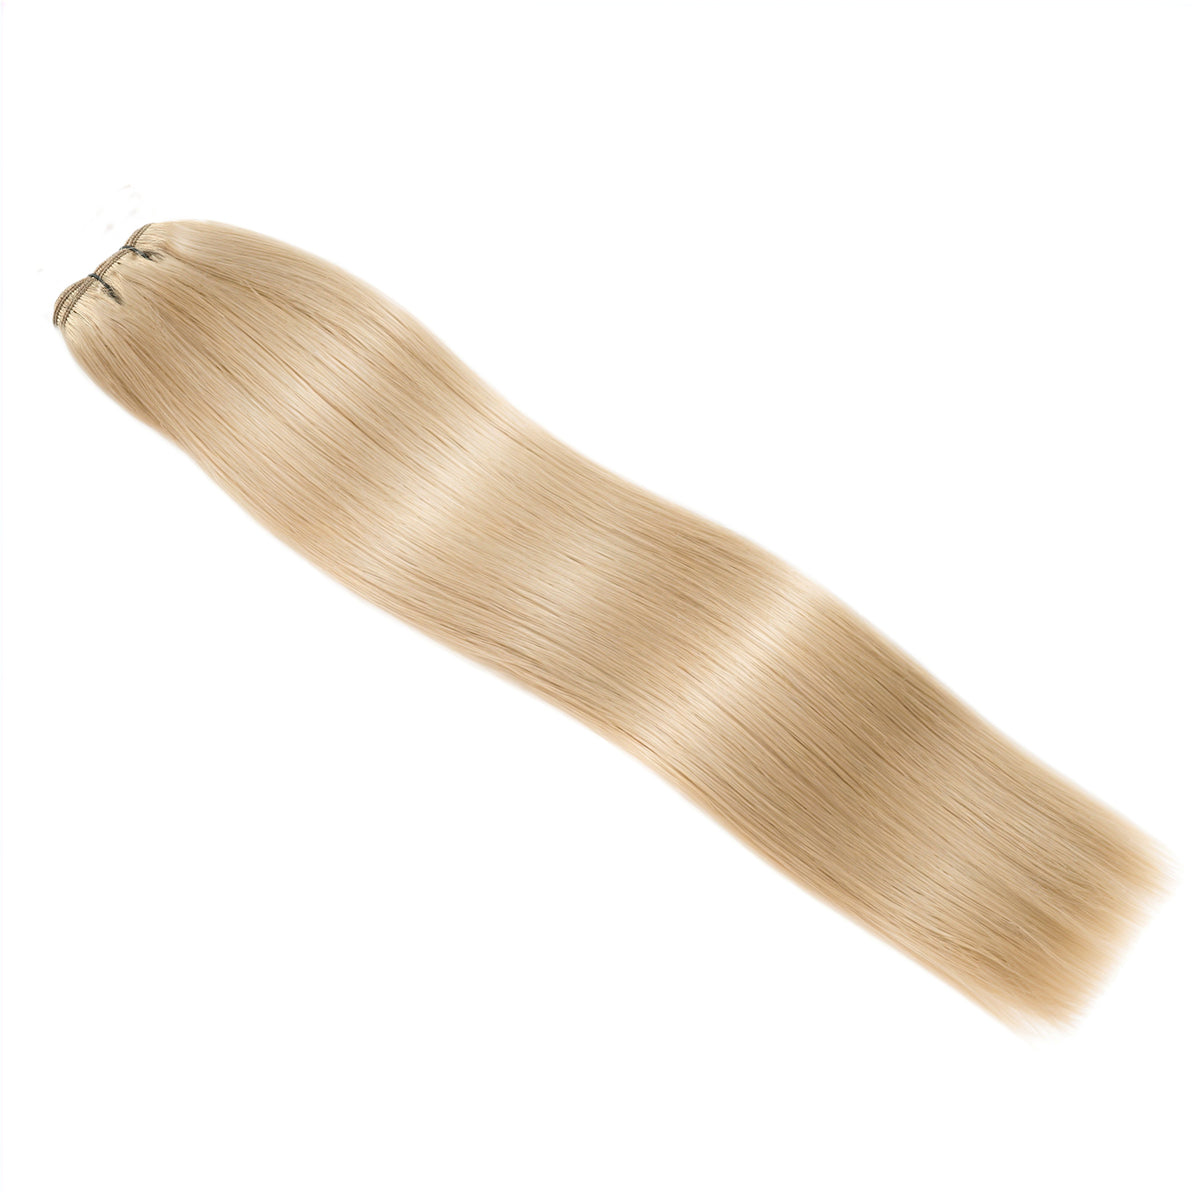 sew in hair extensions in Sandy blonde